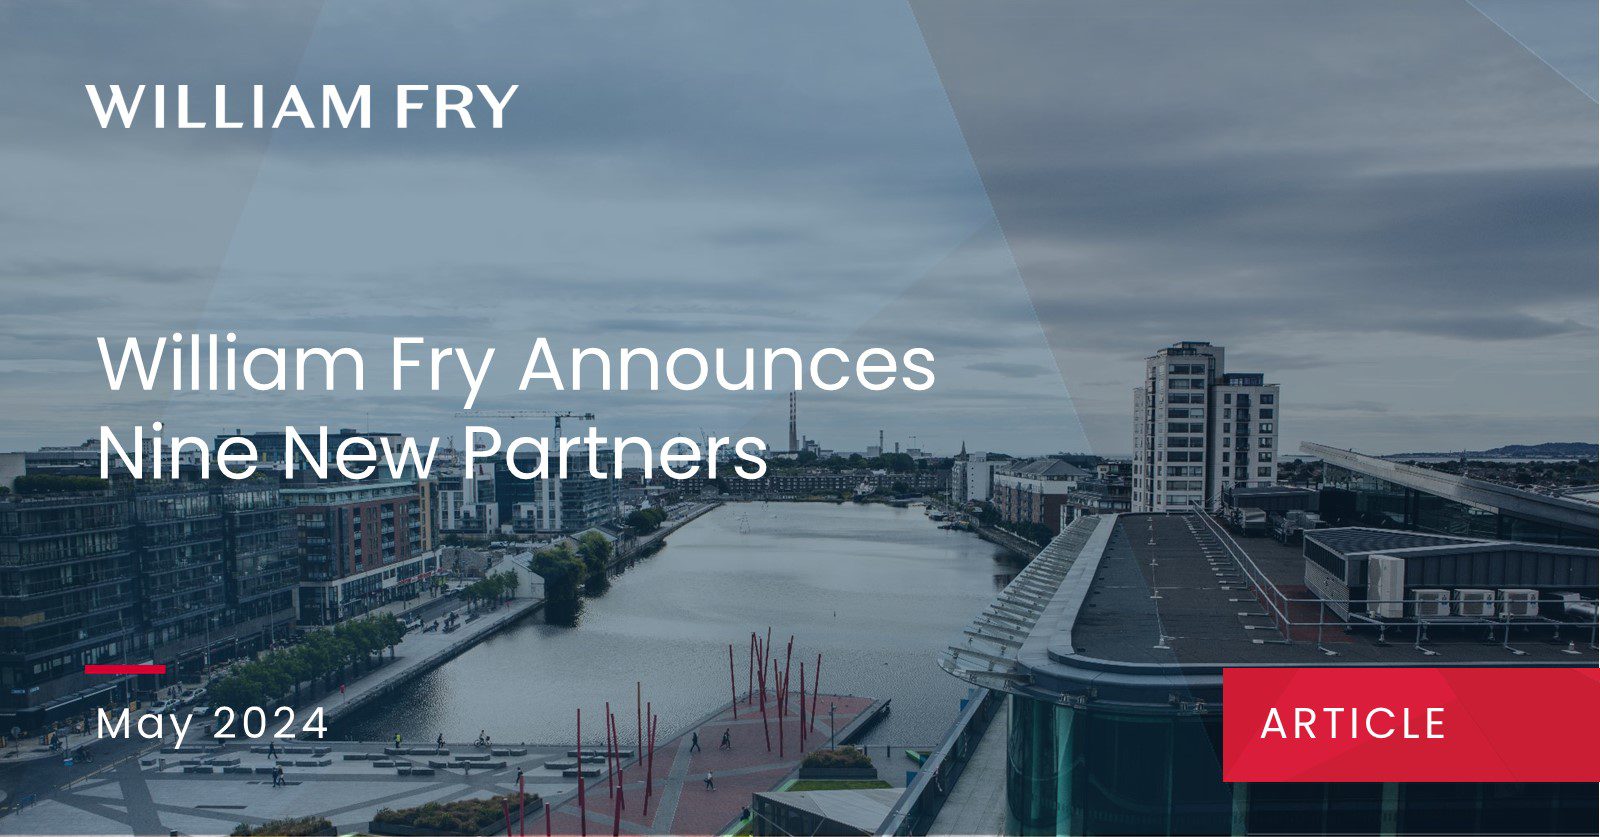 William Fry Announces Nine New Partners